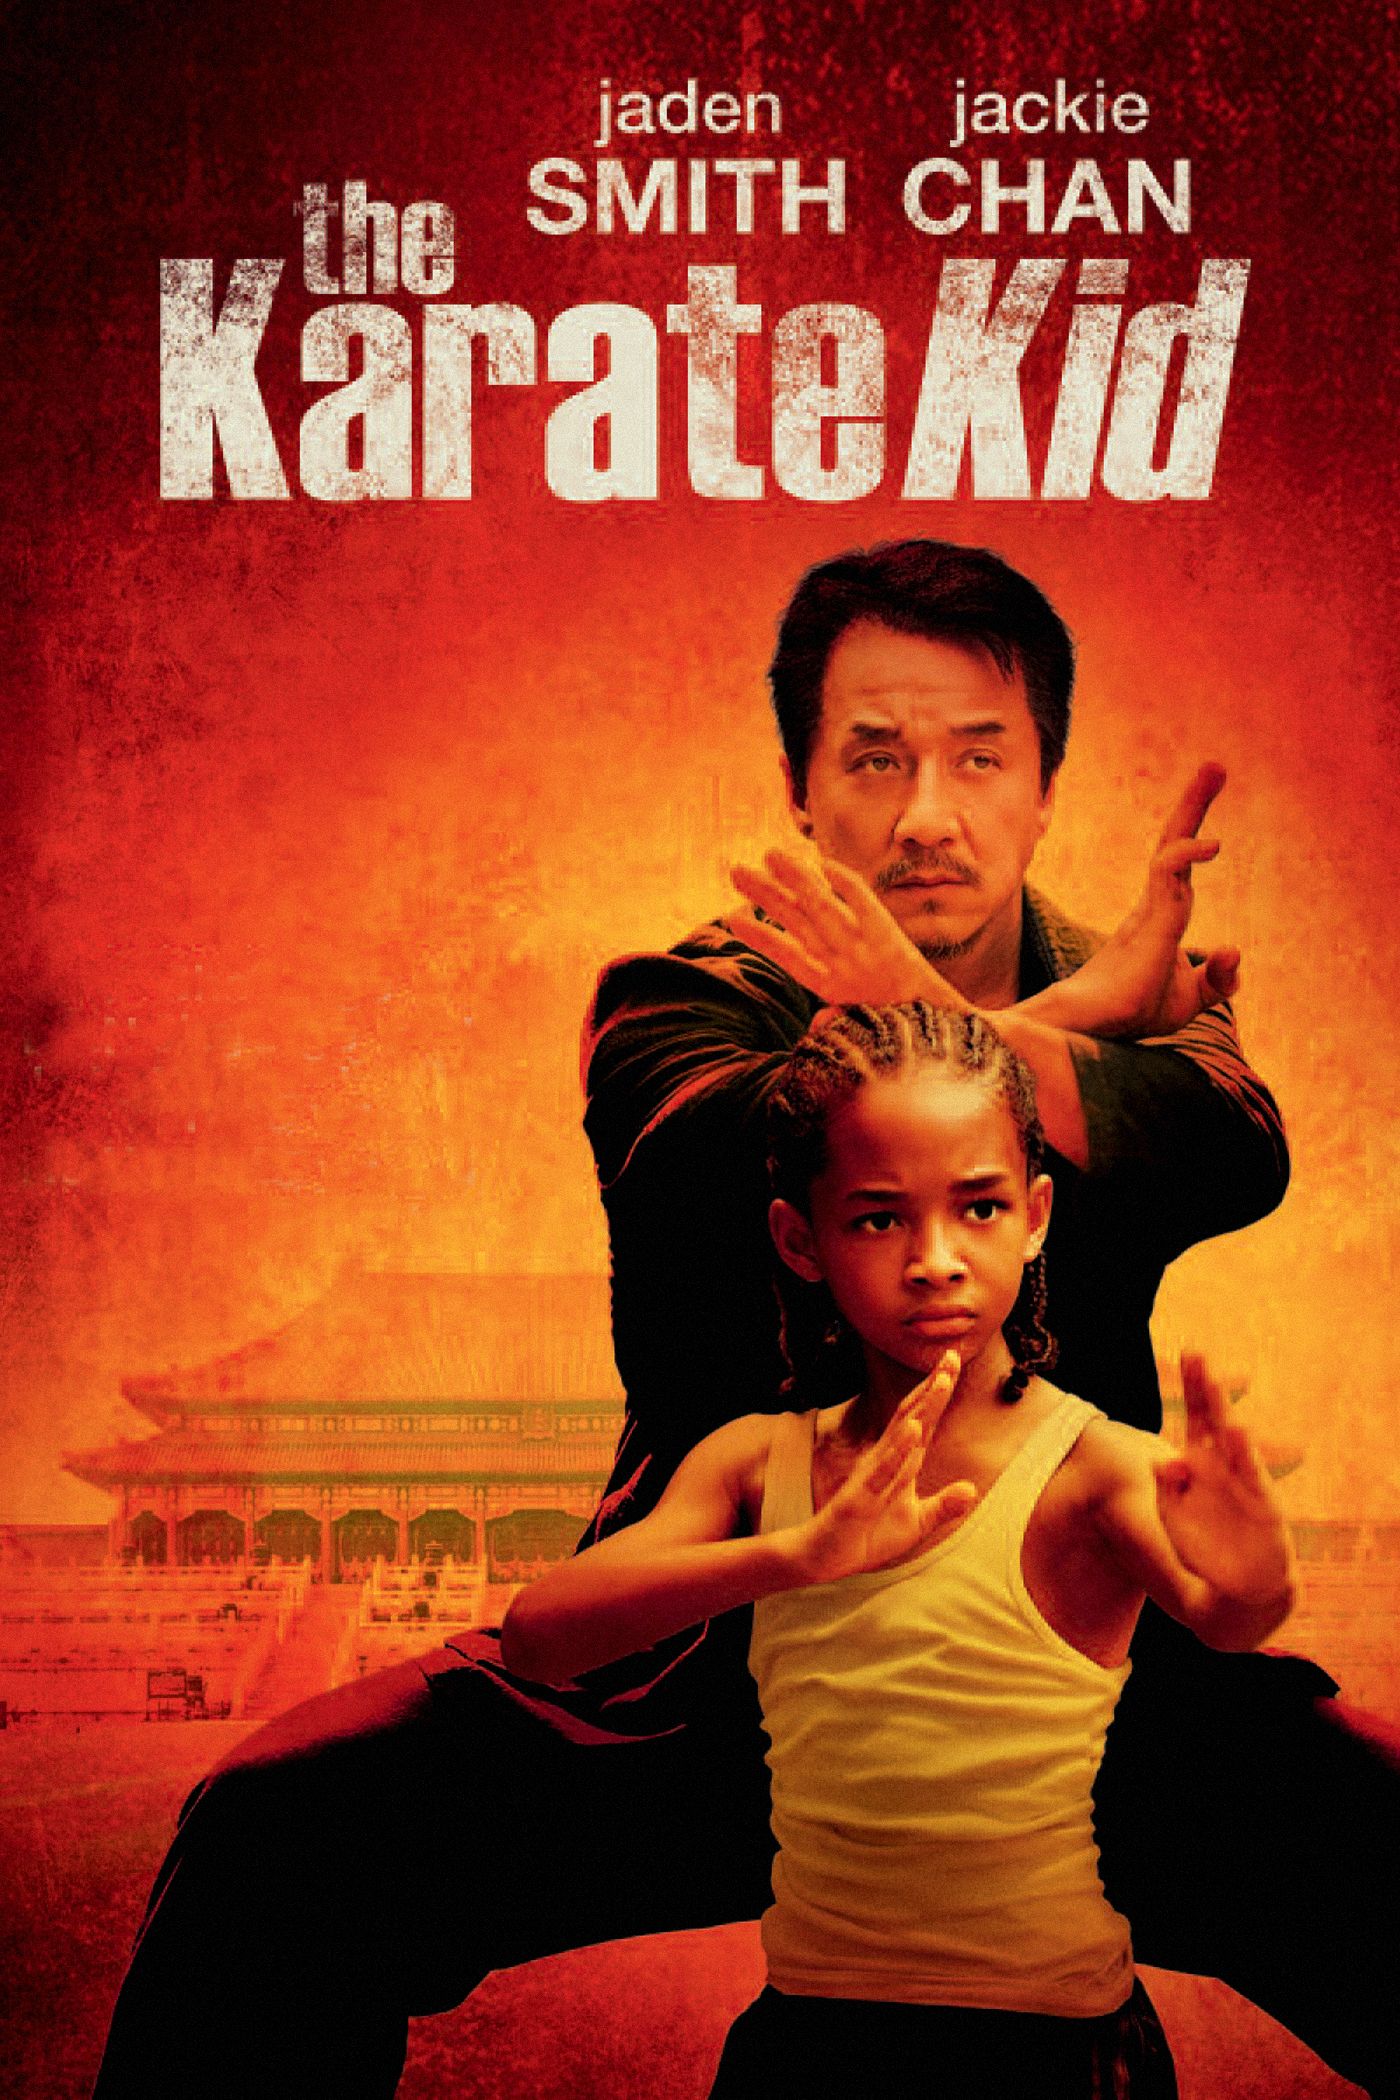 The Karate Kid (2010) Wallpapers